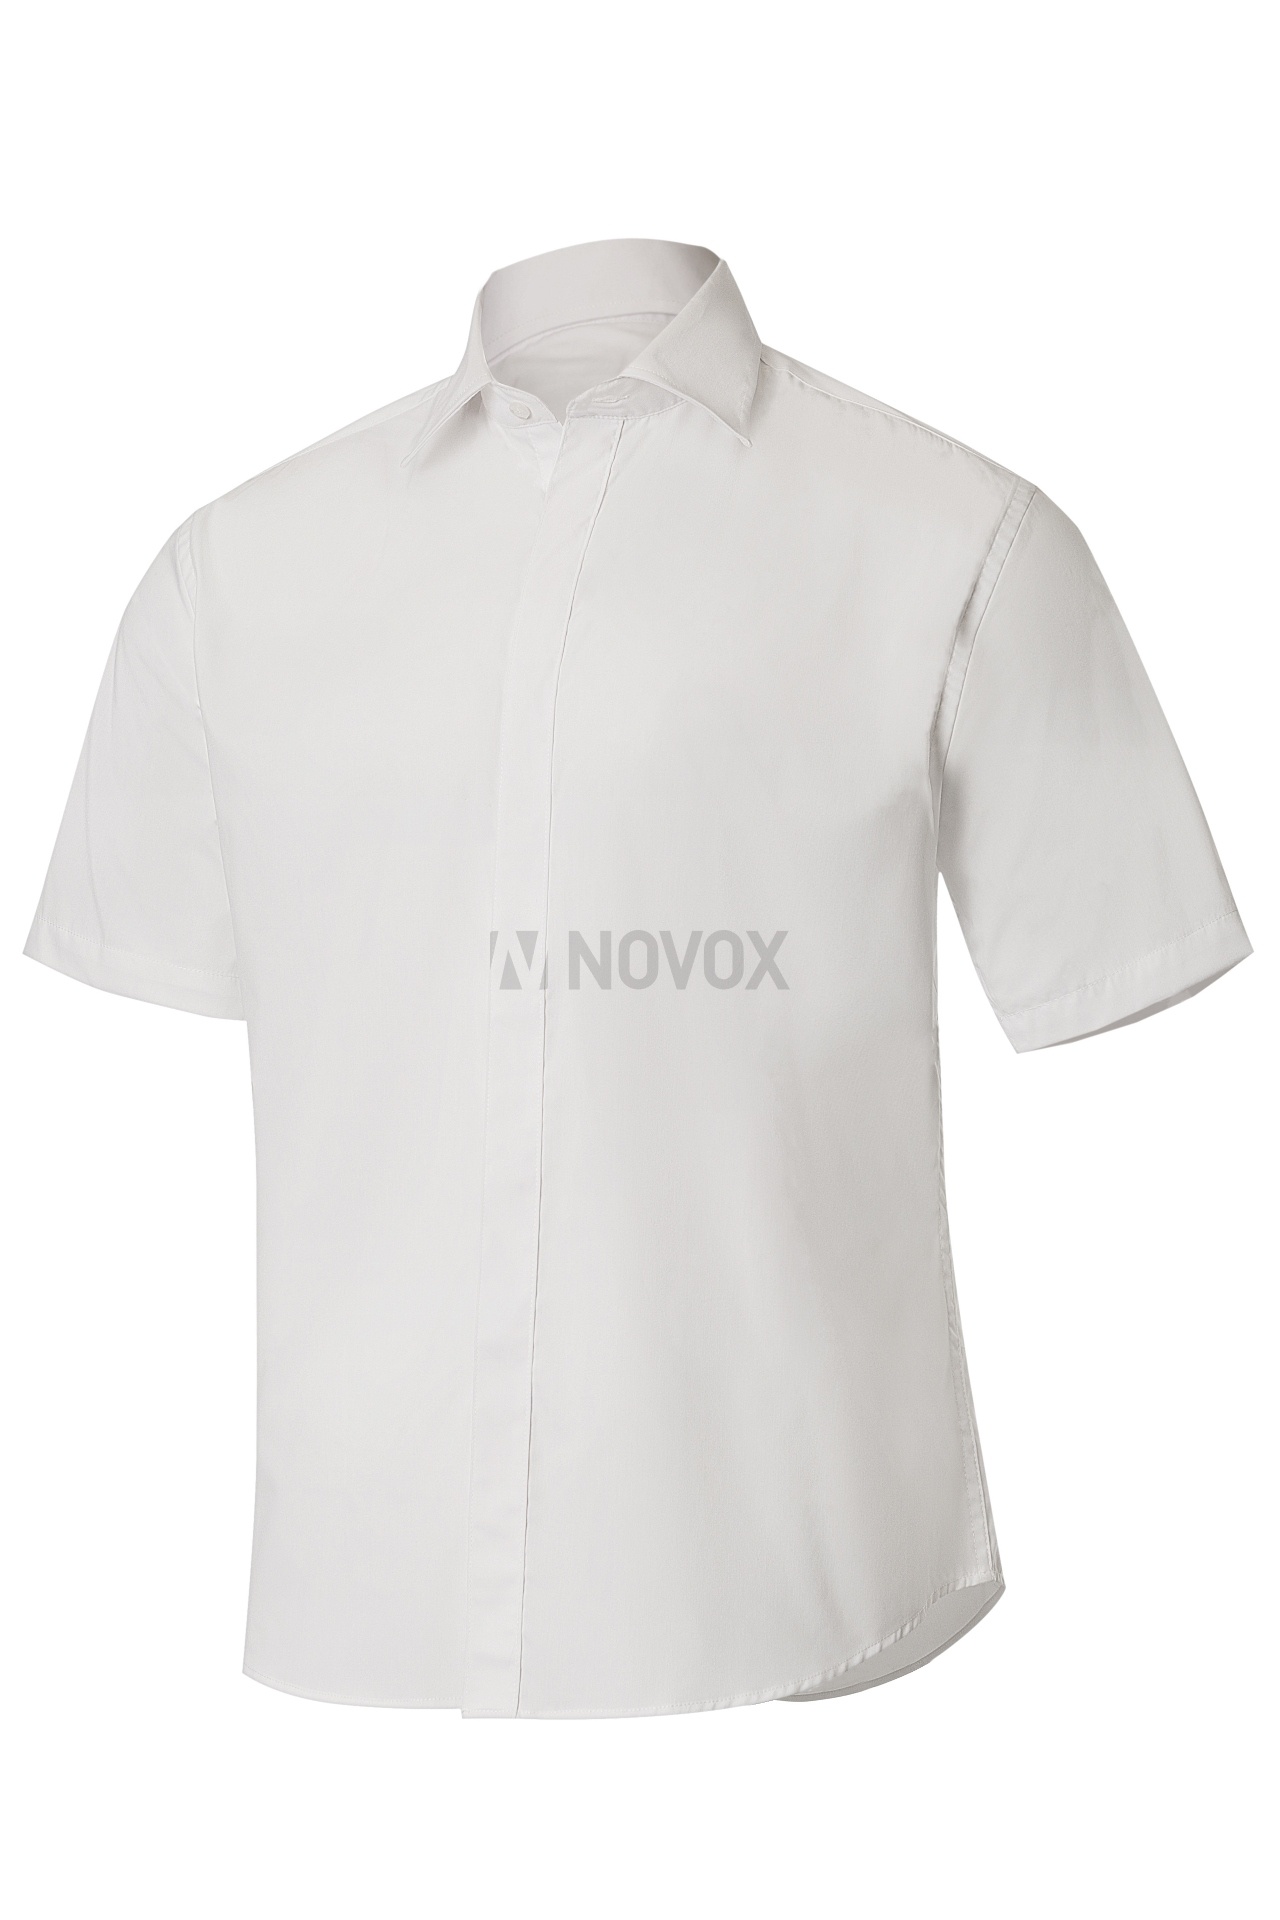 Рубашка ЭЛЬ РИСТО (EL RISTO) с коротким рукавом мужская белая